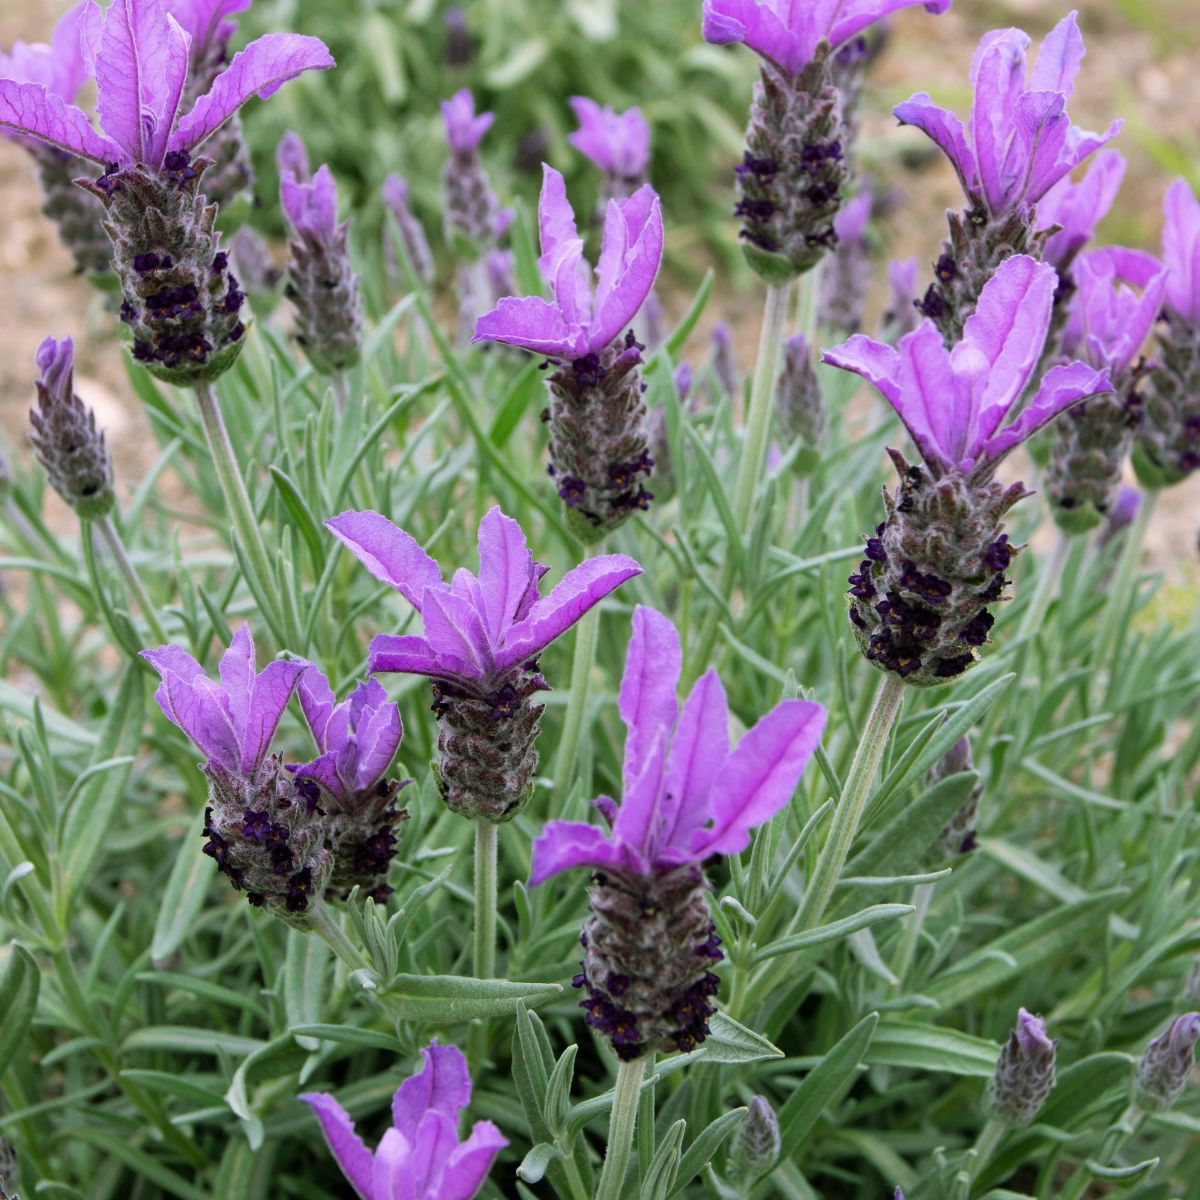 Bright purple lavender flowers.